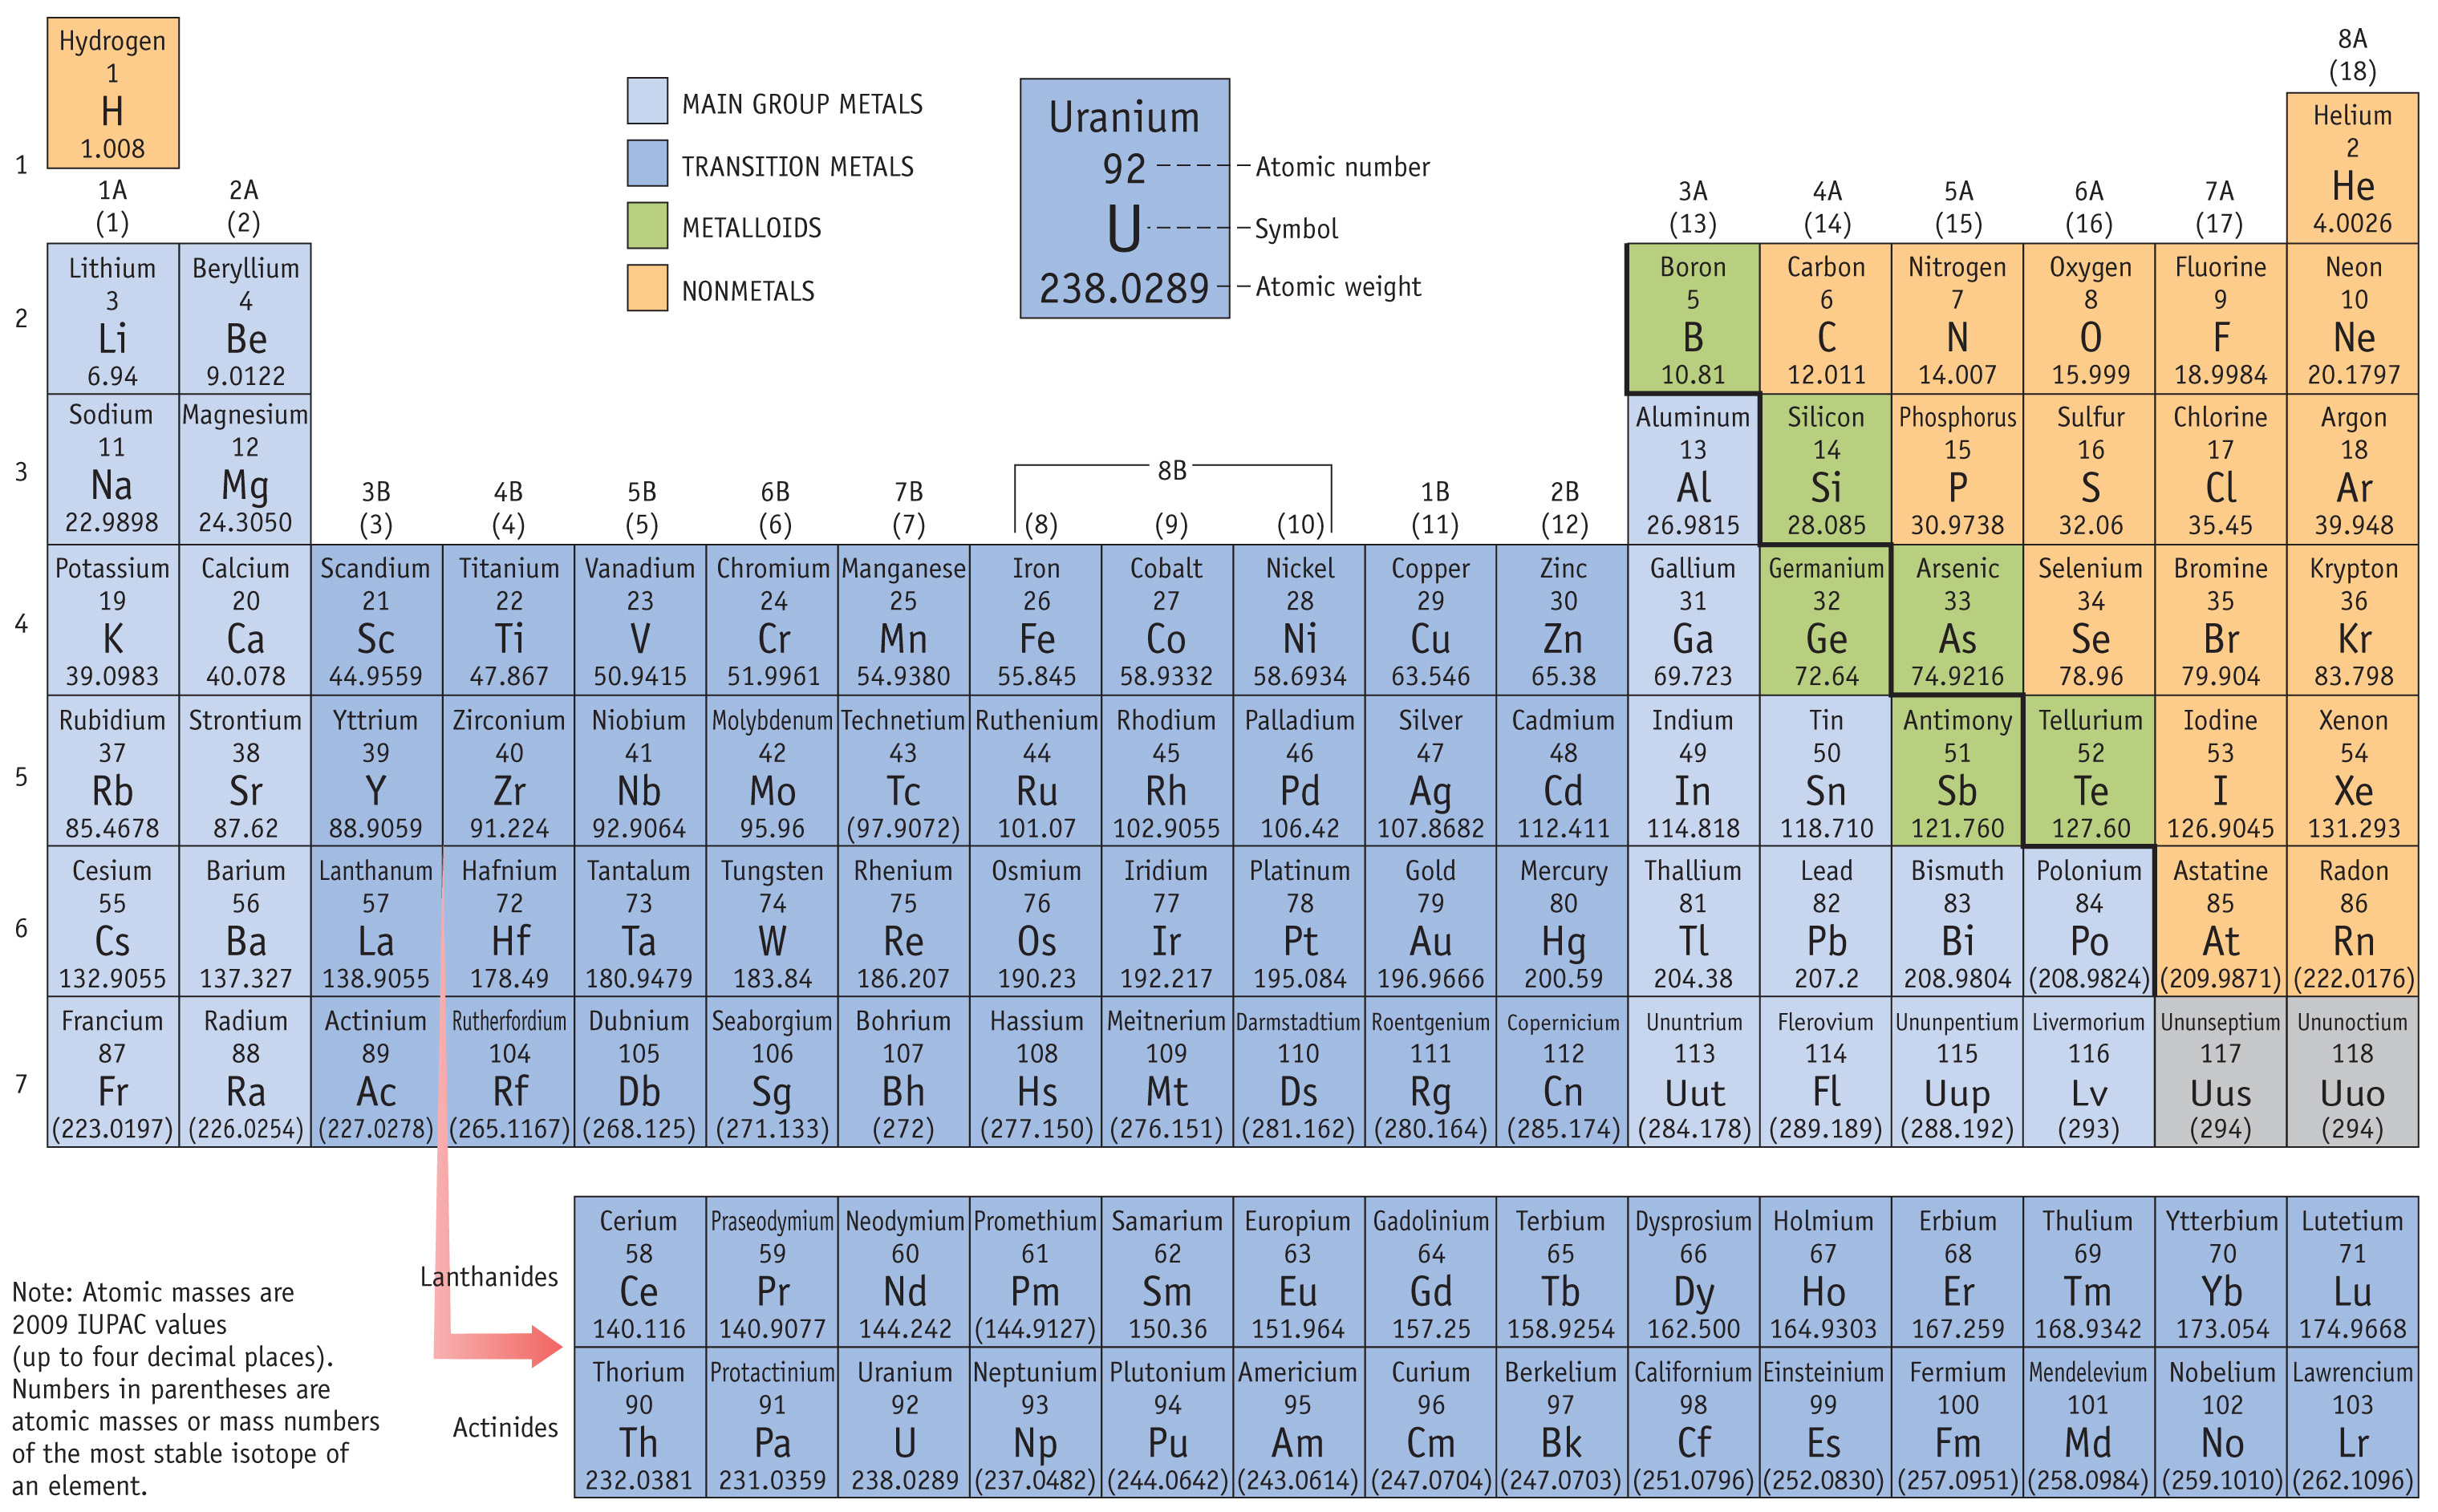 Ebony riddle chrome yttrium platinum iodine carbon